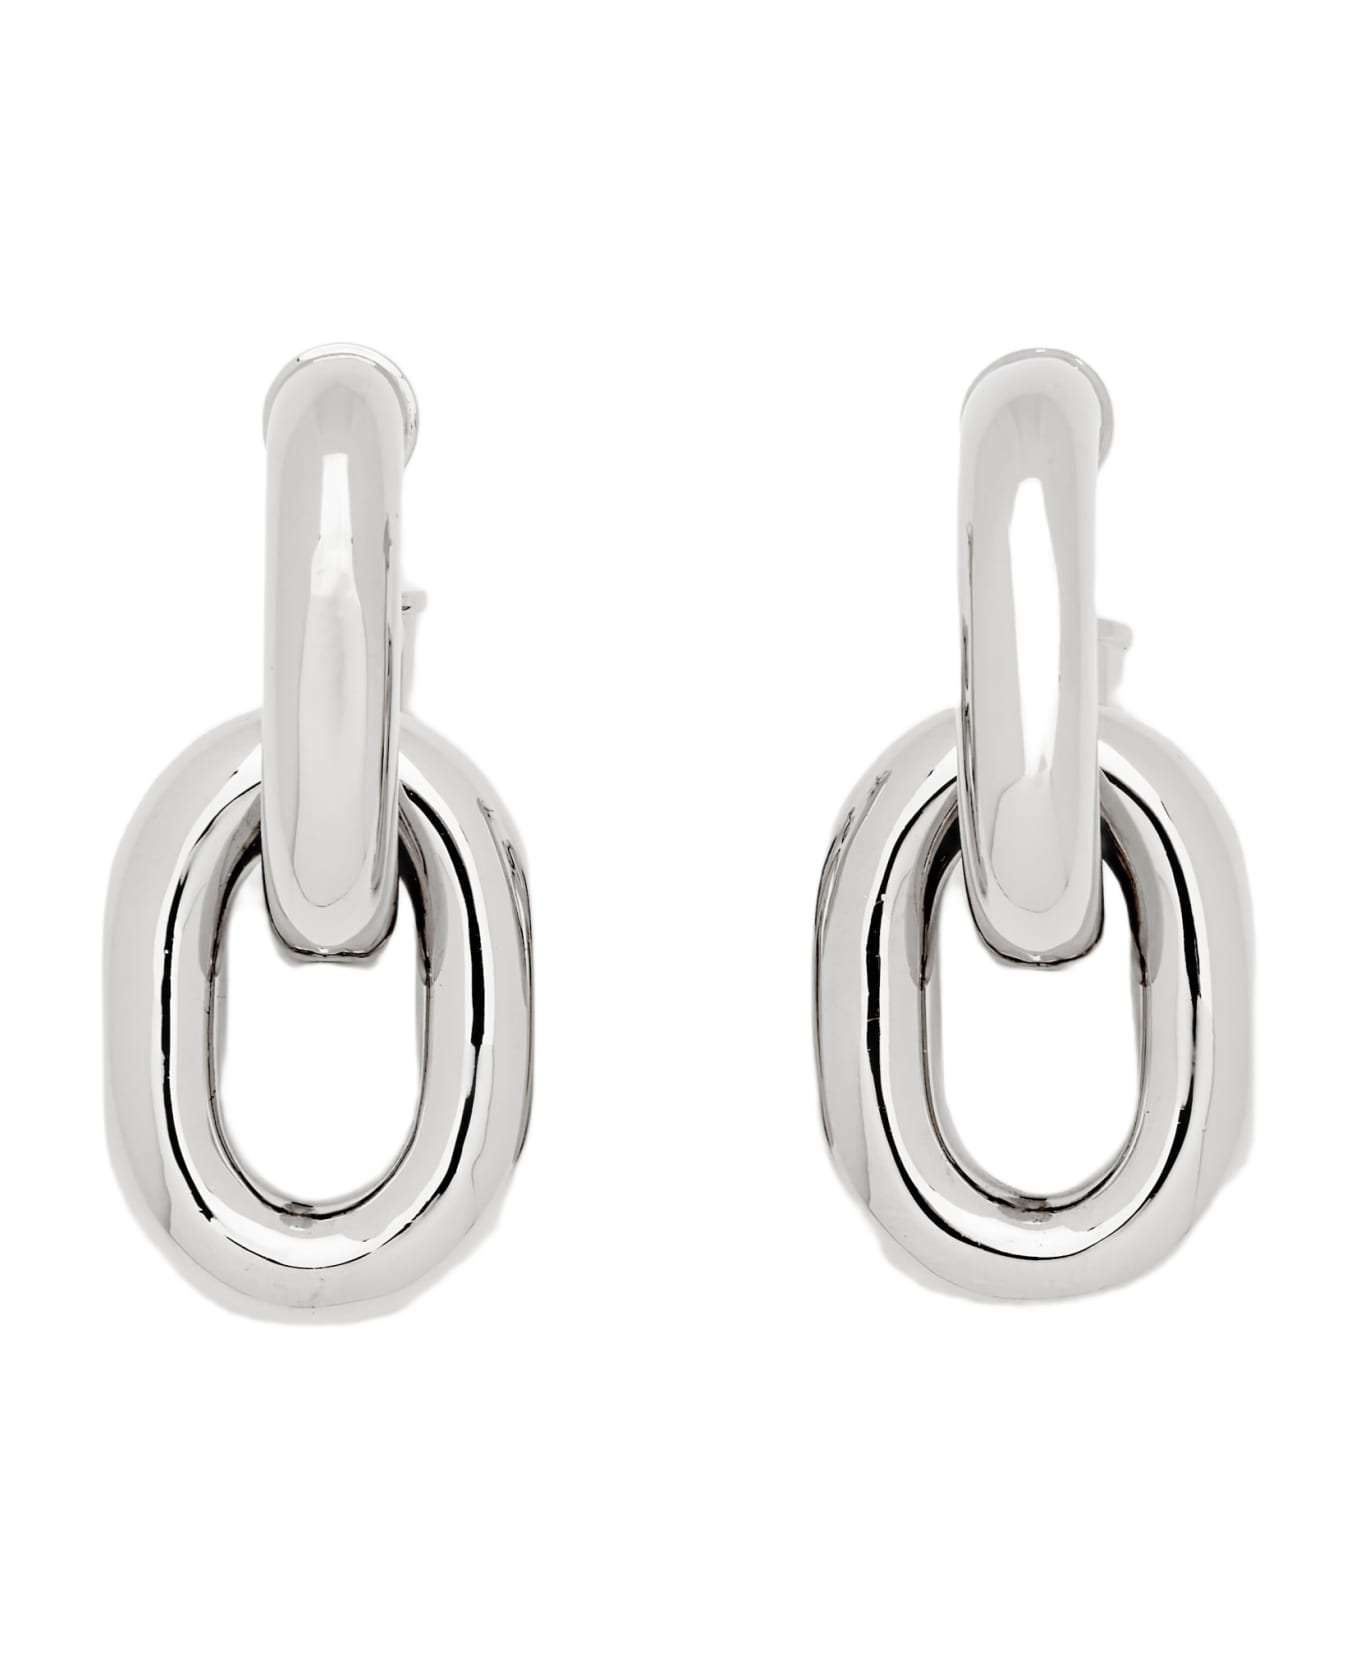 Paco Rabanne Xl Link Double Hoop Earrings - Silver